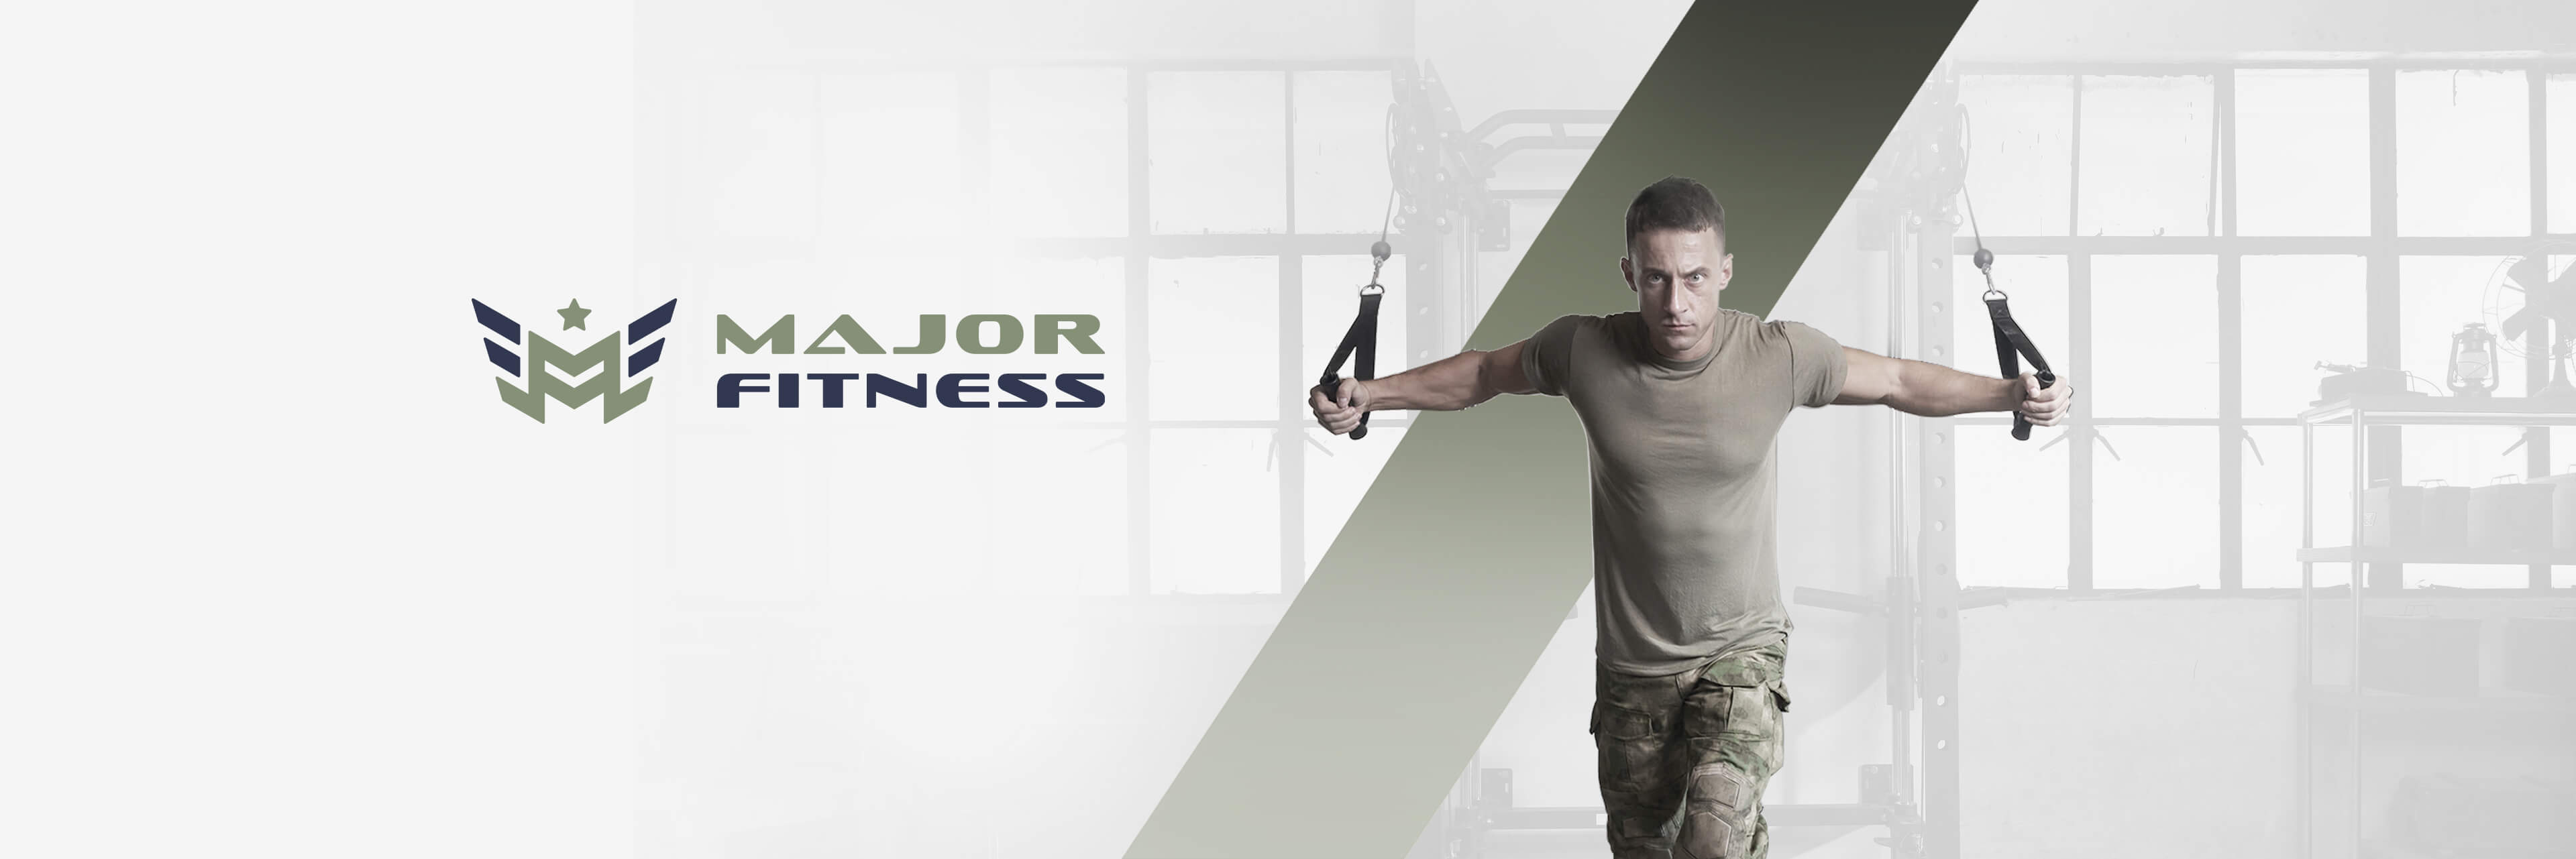 Major Fitness announces new logo